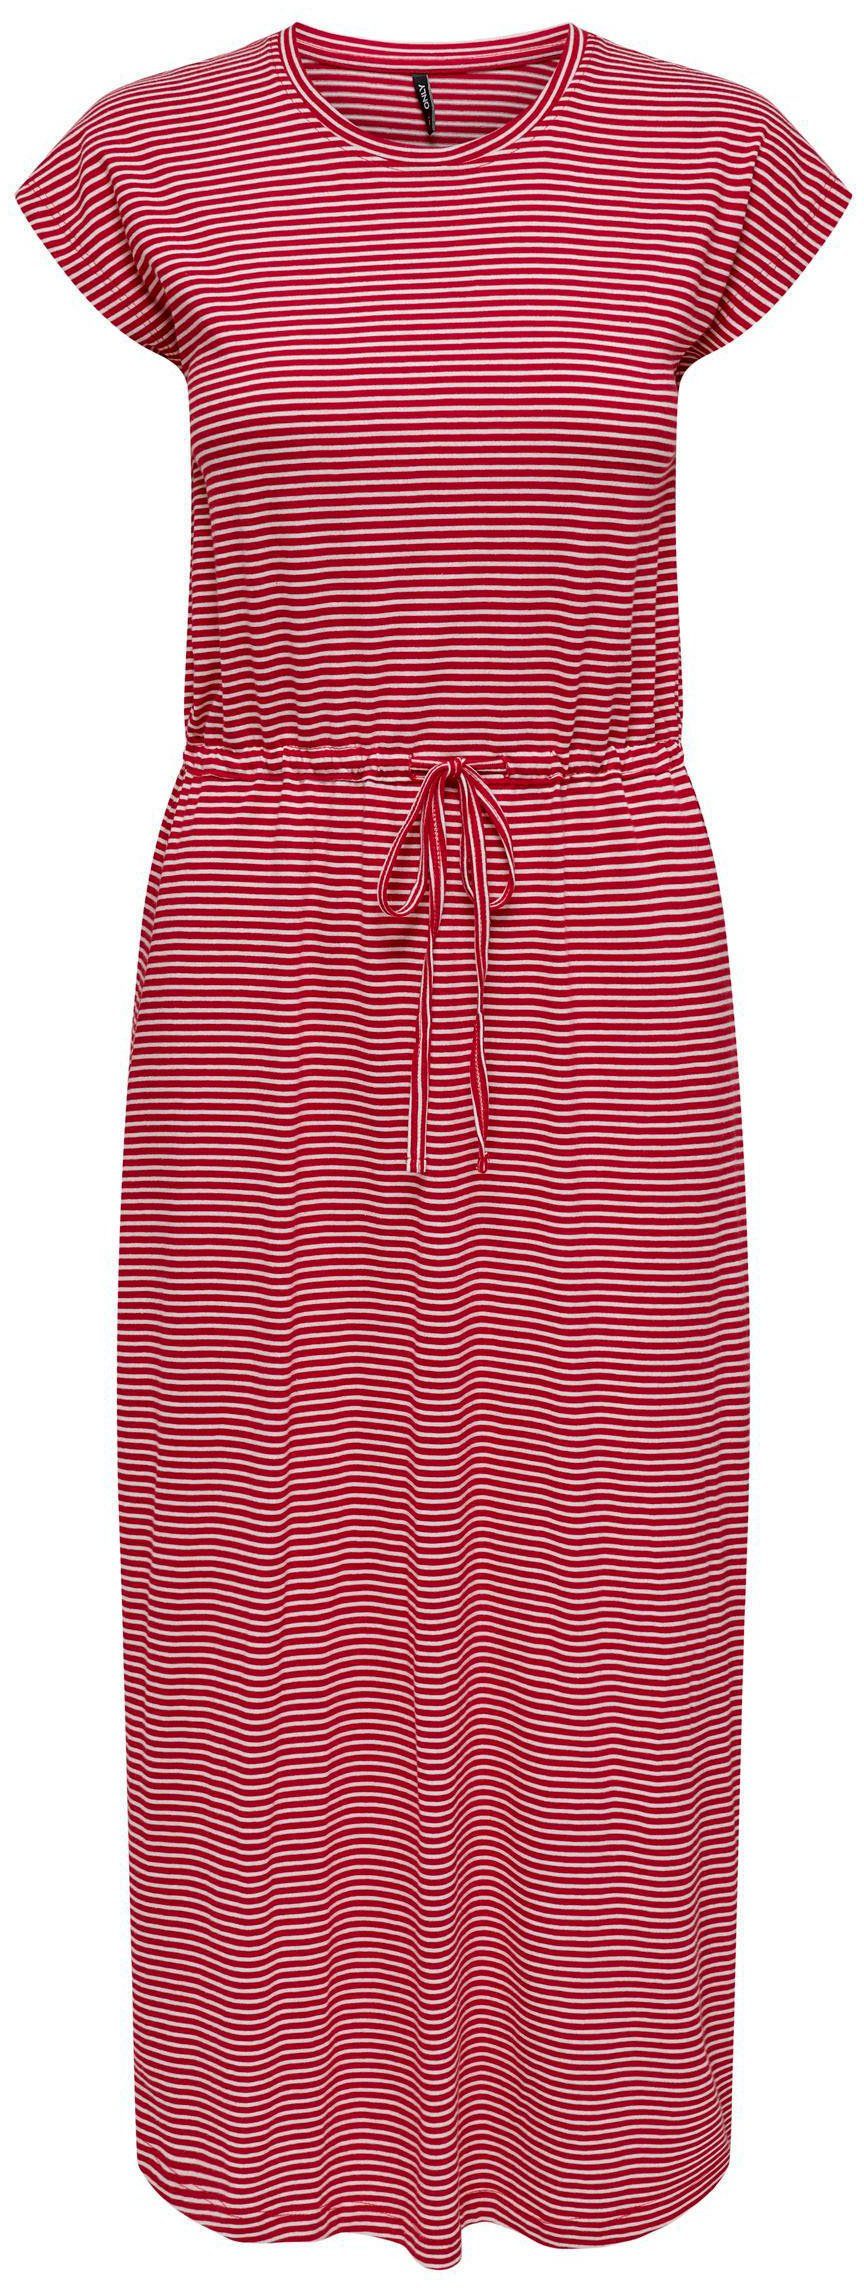 ONLMAY Jerseykleid High Red MIDI Optik Streifen Risk ONLY STRIPE In S/S DRESS Stripes